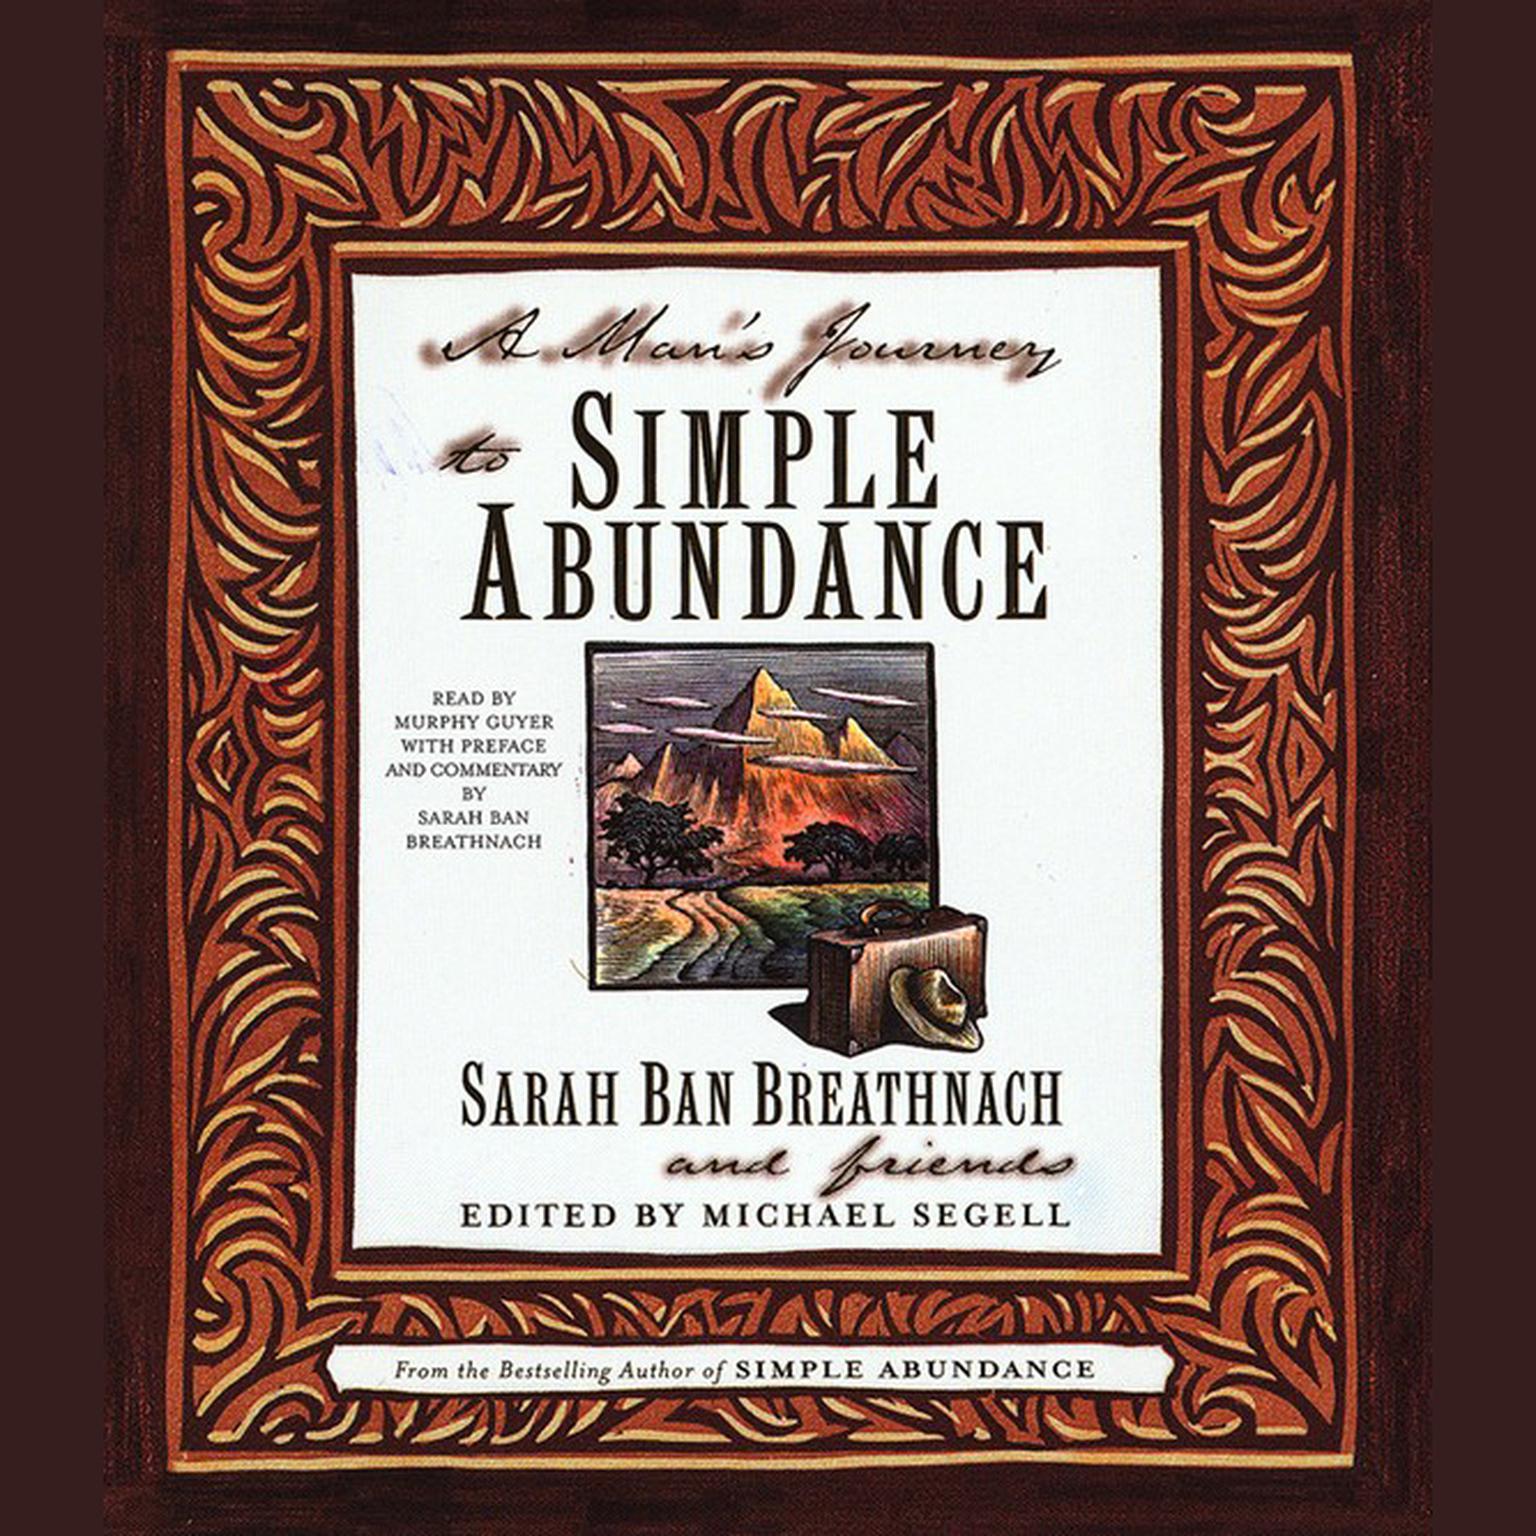 A Mans Journey to Simple Abundance (Abridged) Audiobook, by Sarah Ban Breathnach